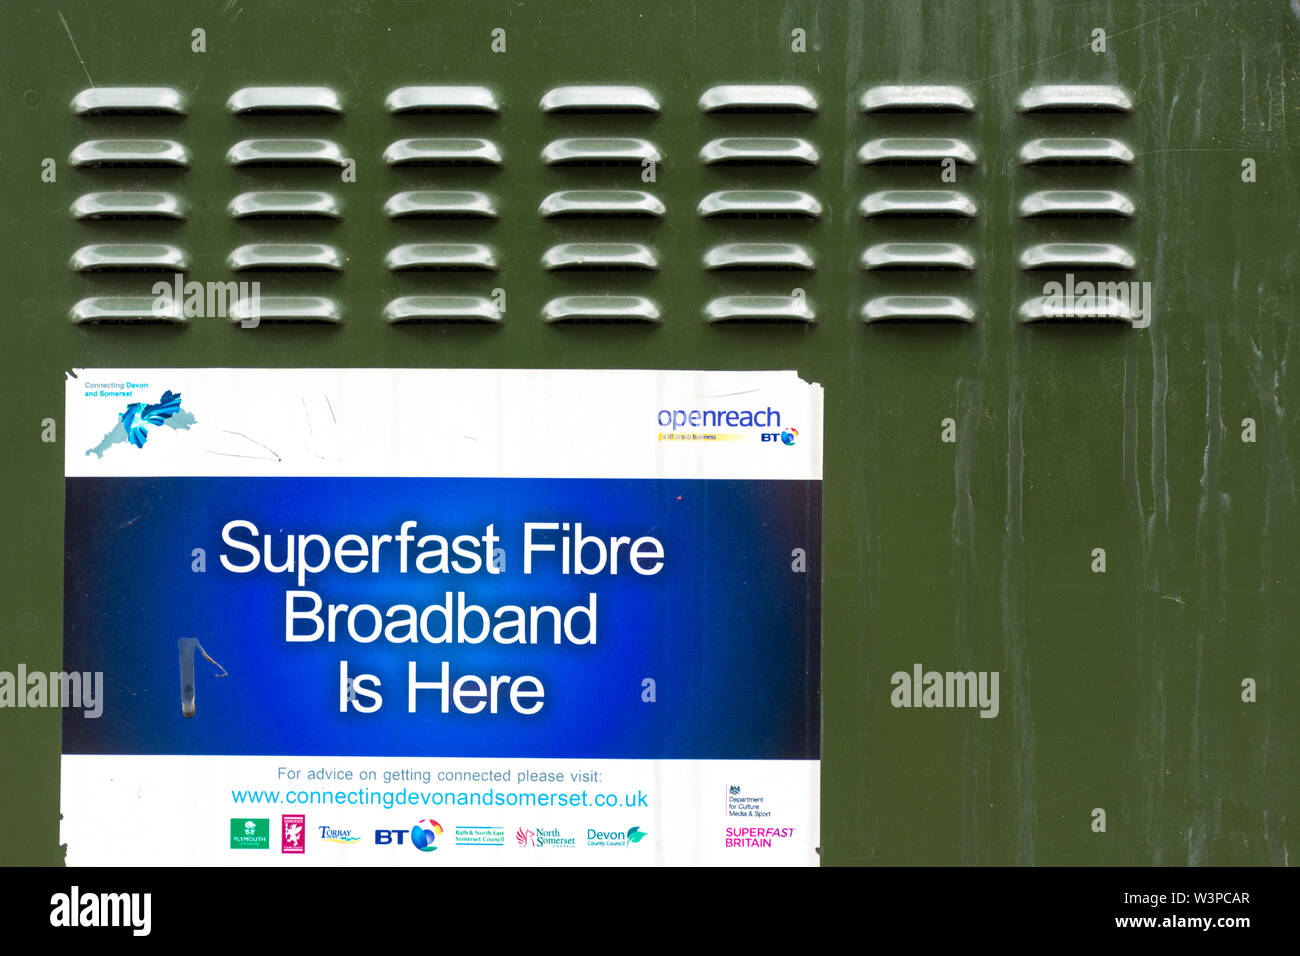 Superfast Fibre Broadband Is Here sign, BT openreach advertising signage, Bath, Somerset, UK Stock Photo